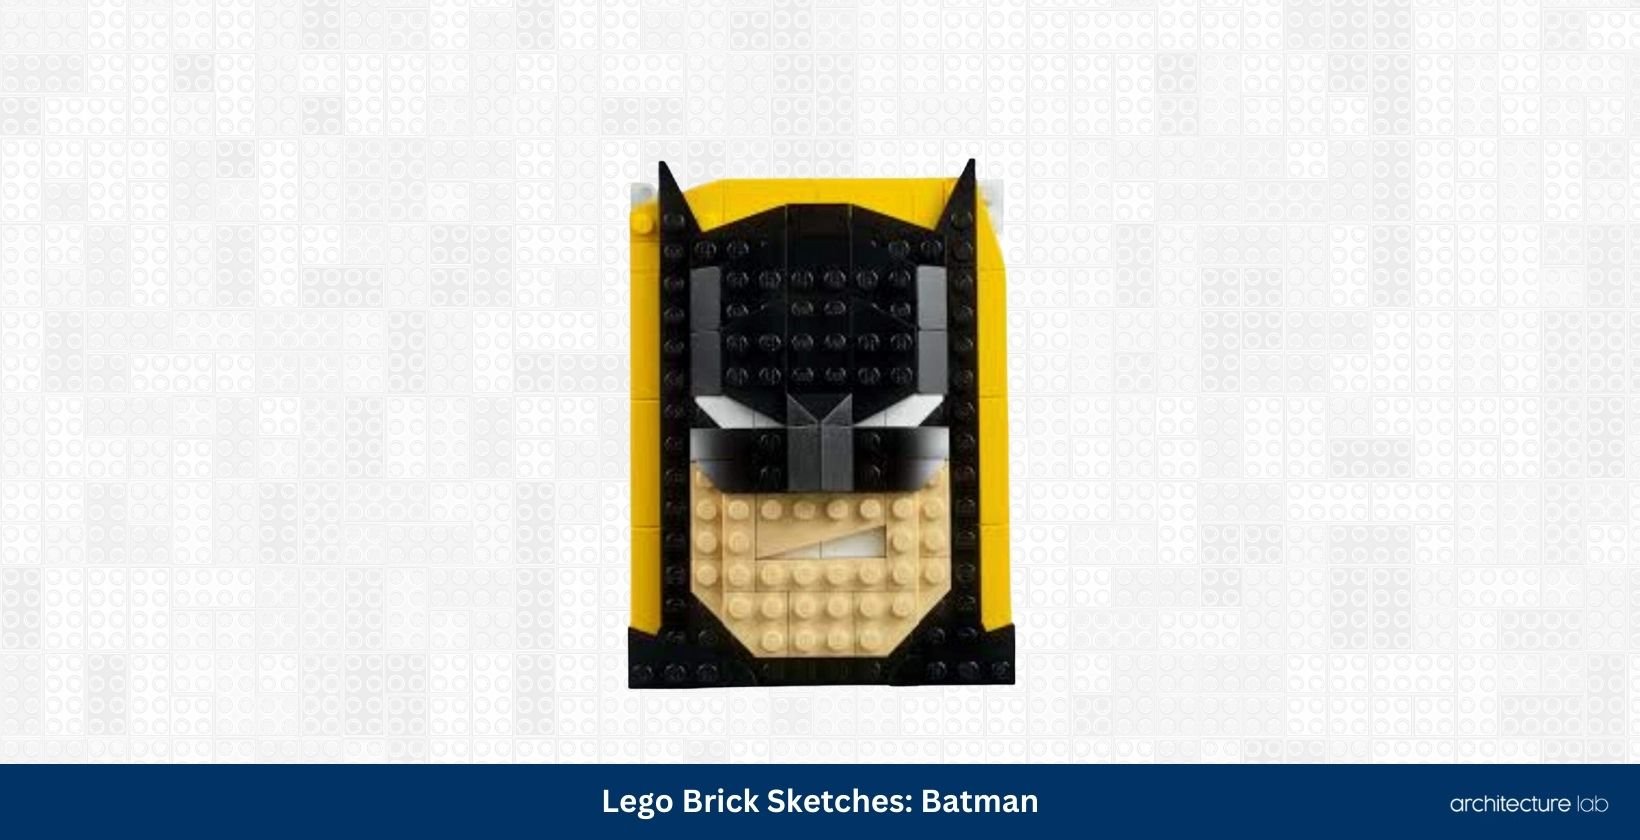 Lego brick sketches